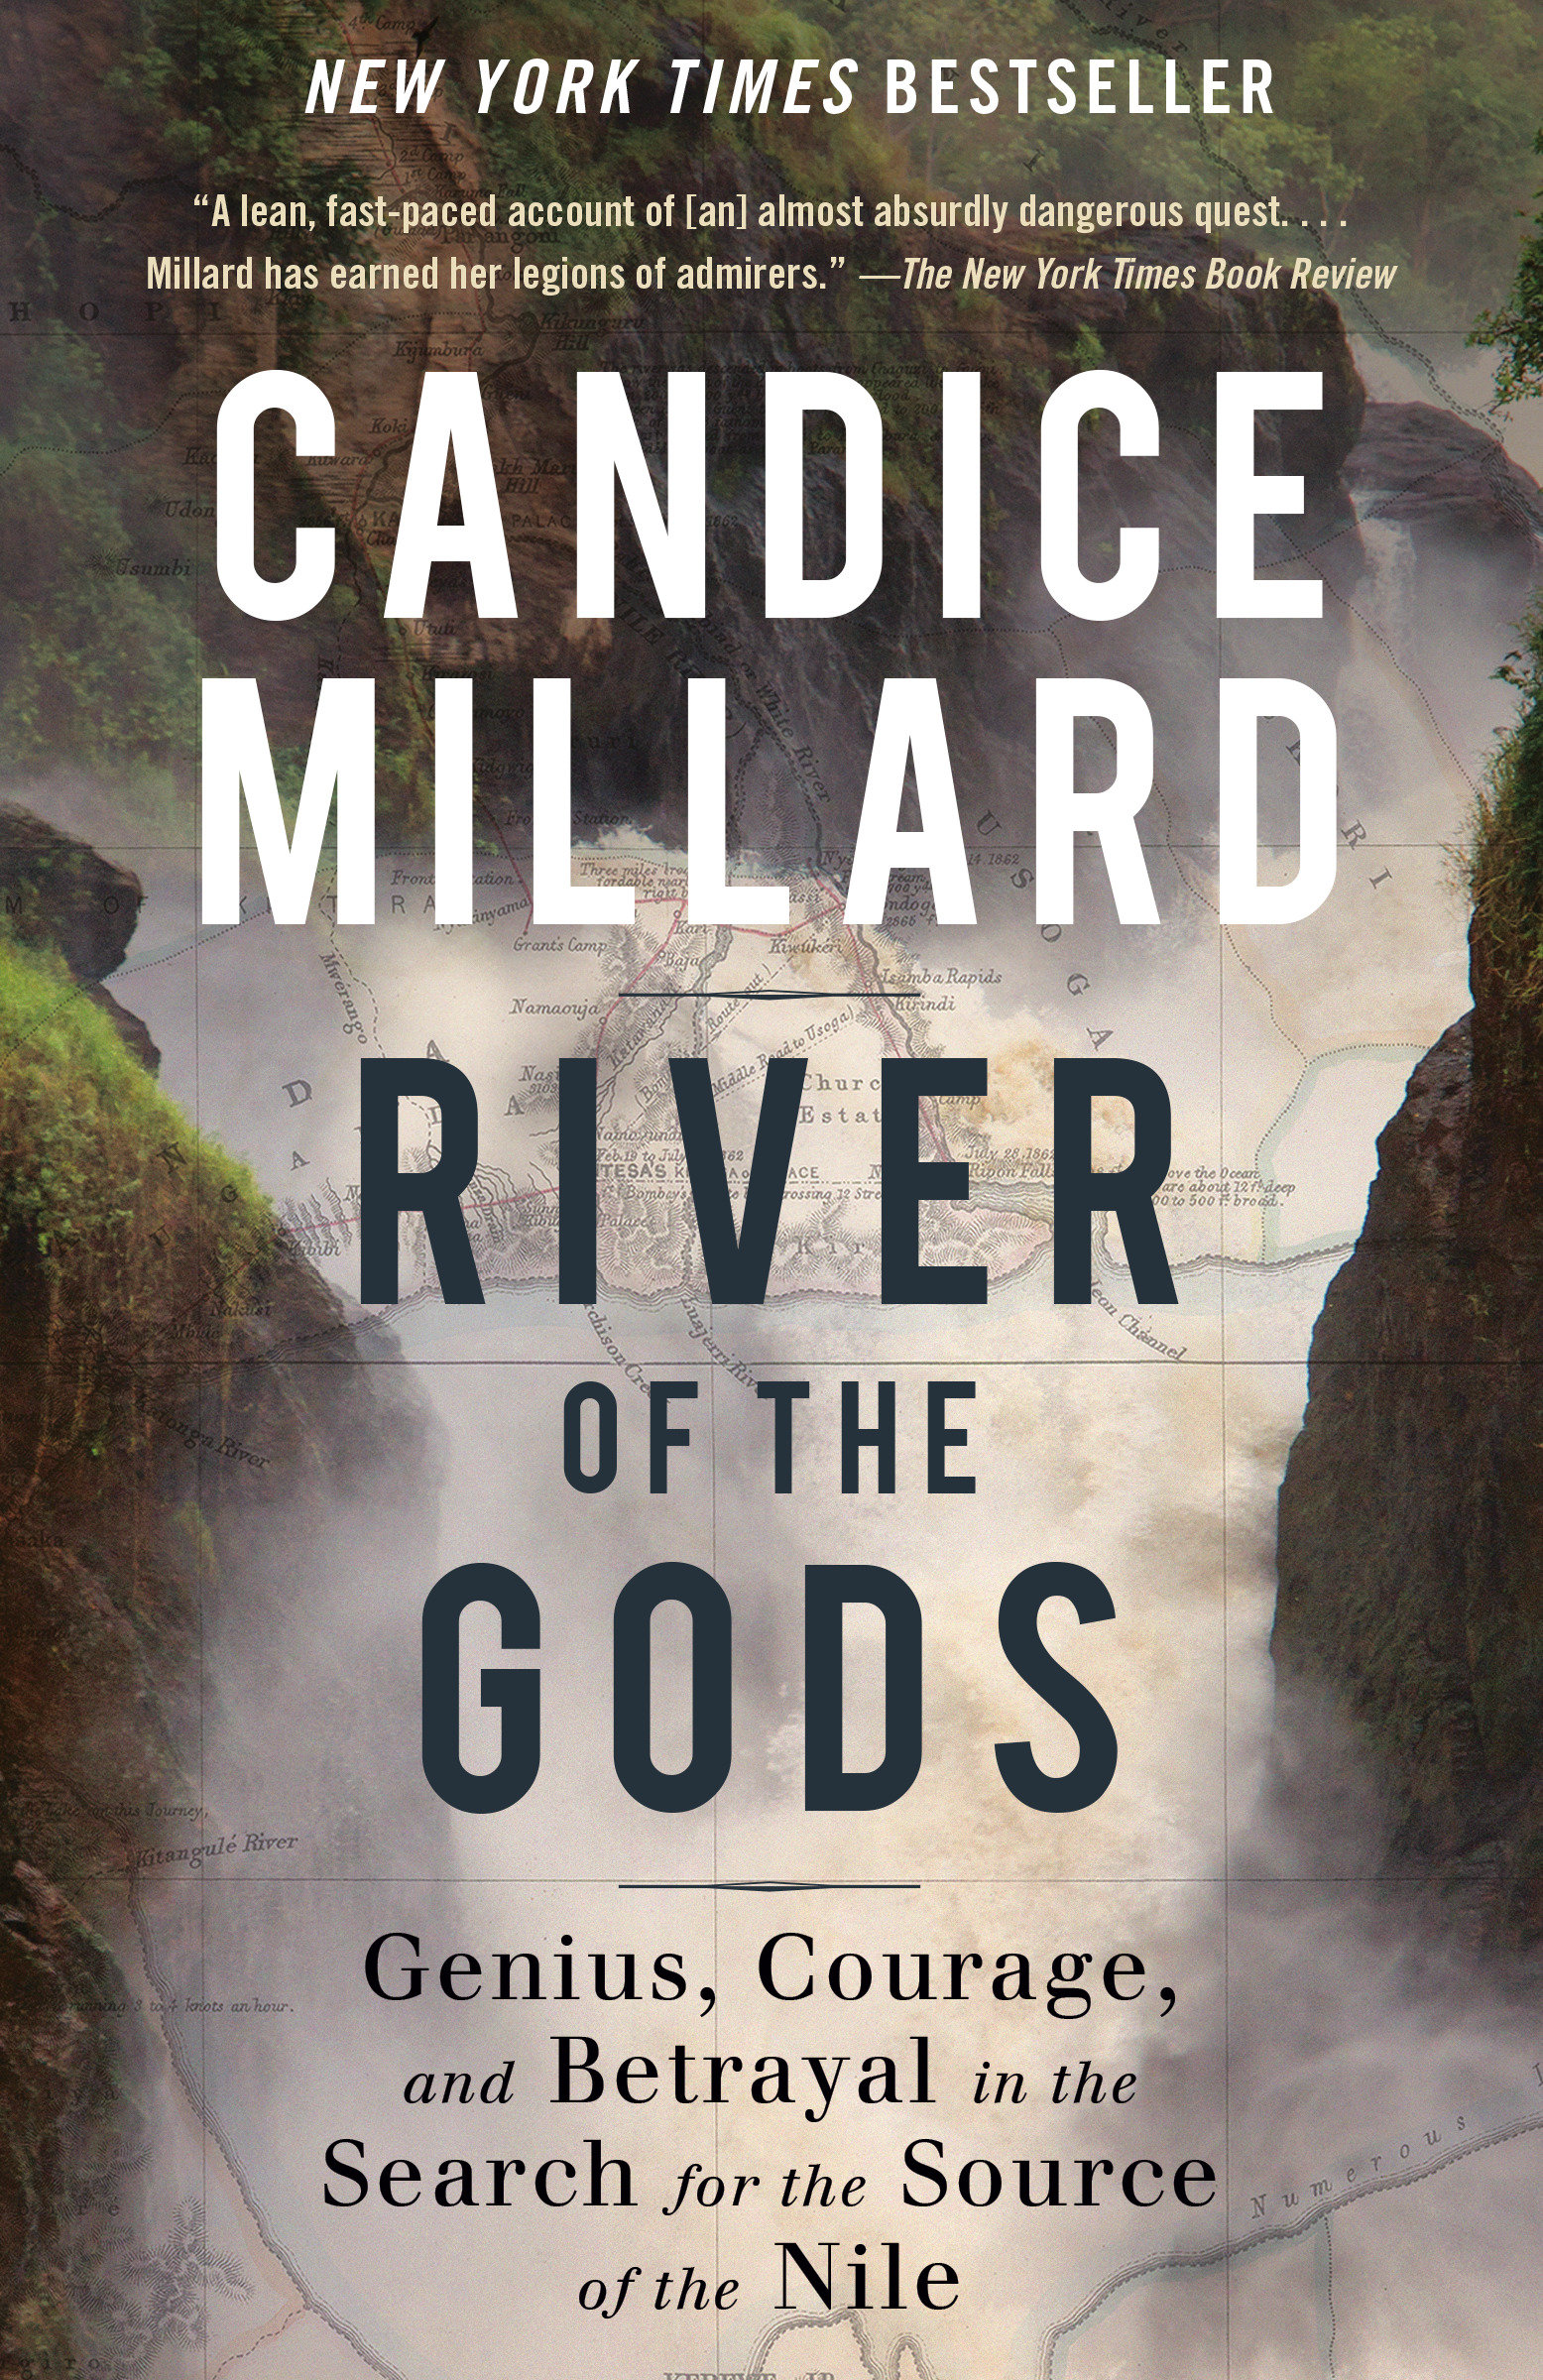 River of the gods : Sir Richard Burton, John Speke, Sidi Mubarak Bombay and the epic search for the source of the Nile